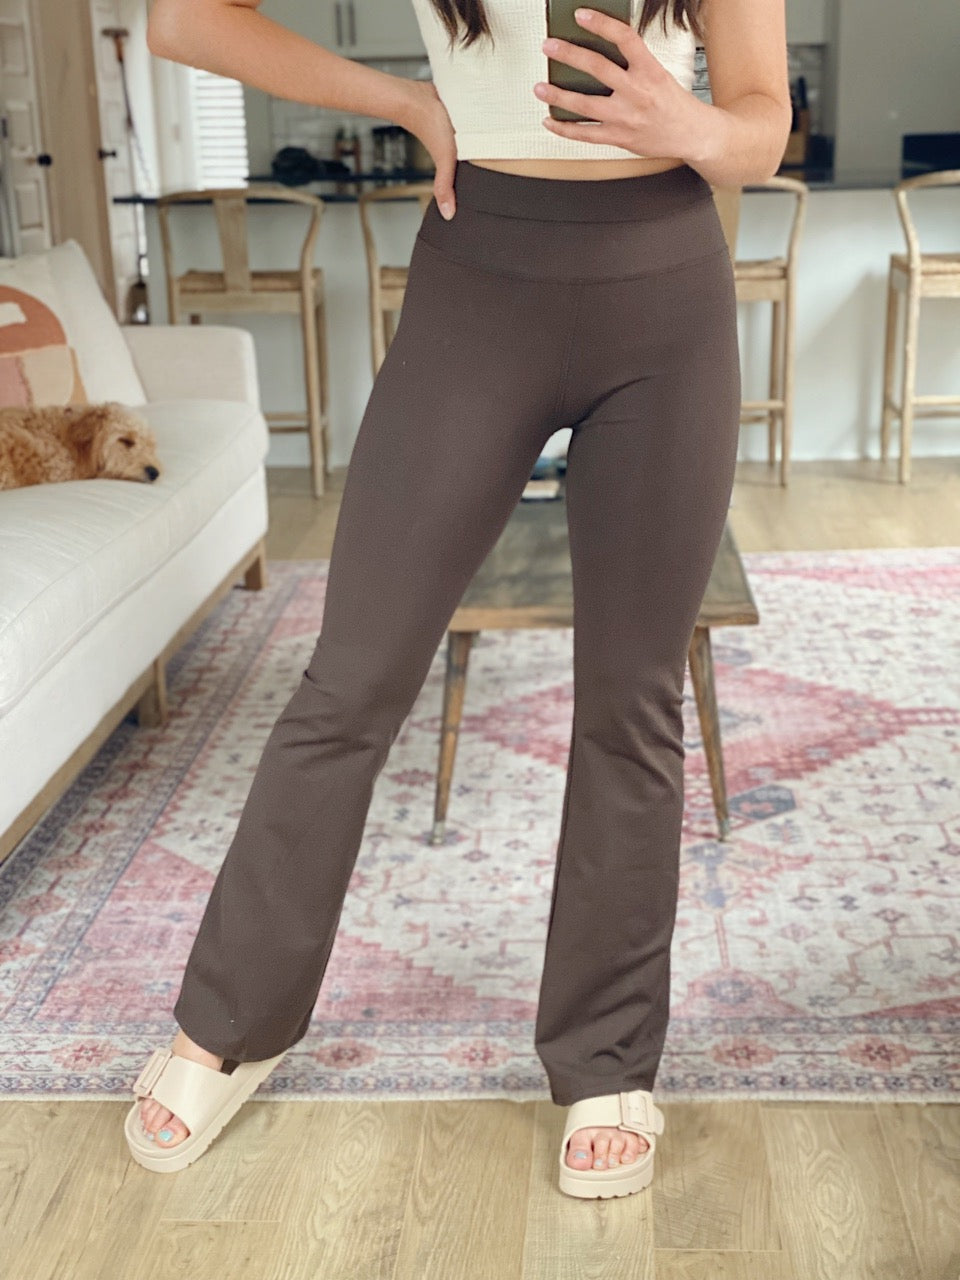 Just Fit Yoga Leggings — Alana's Notebook